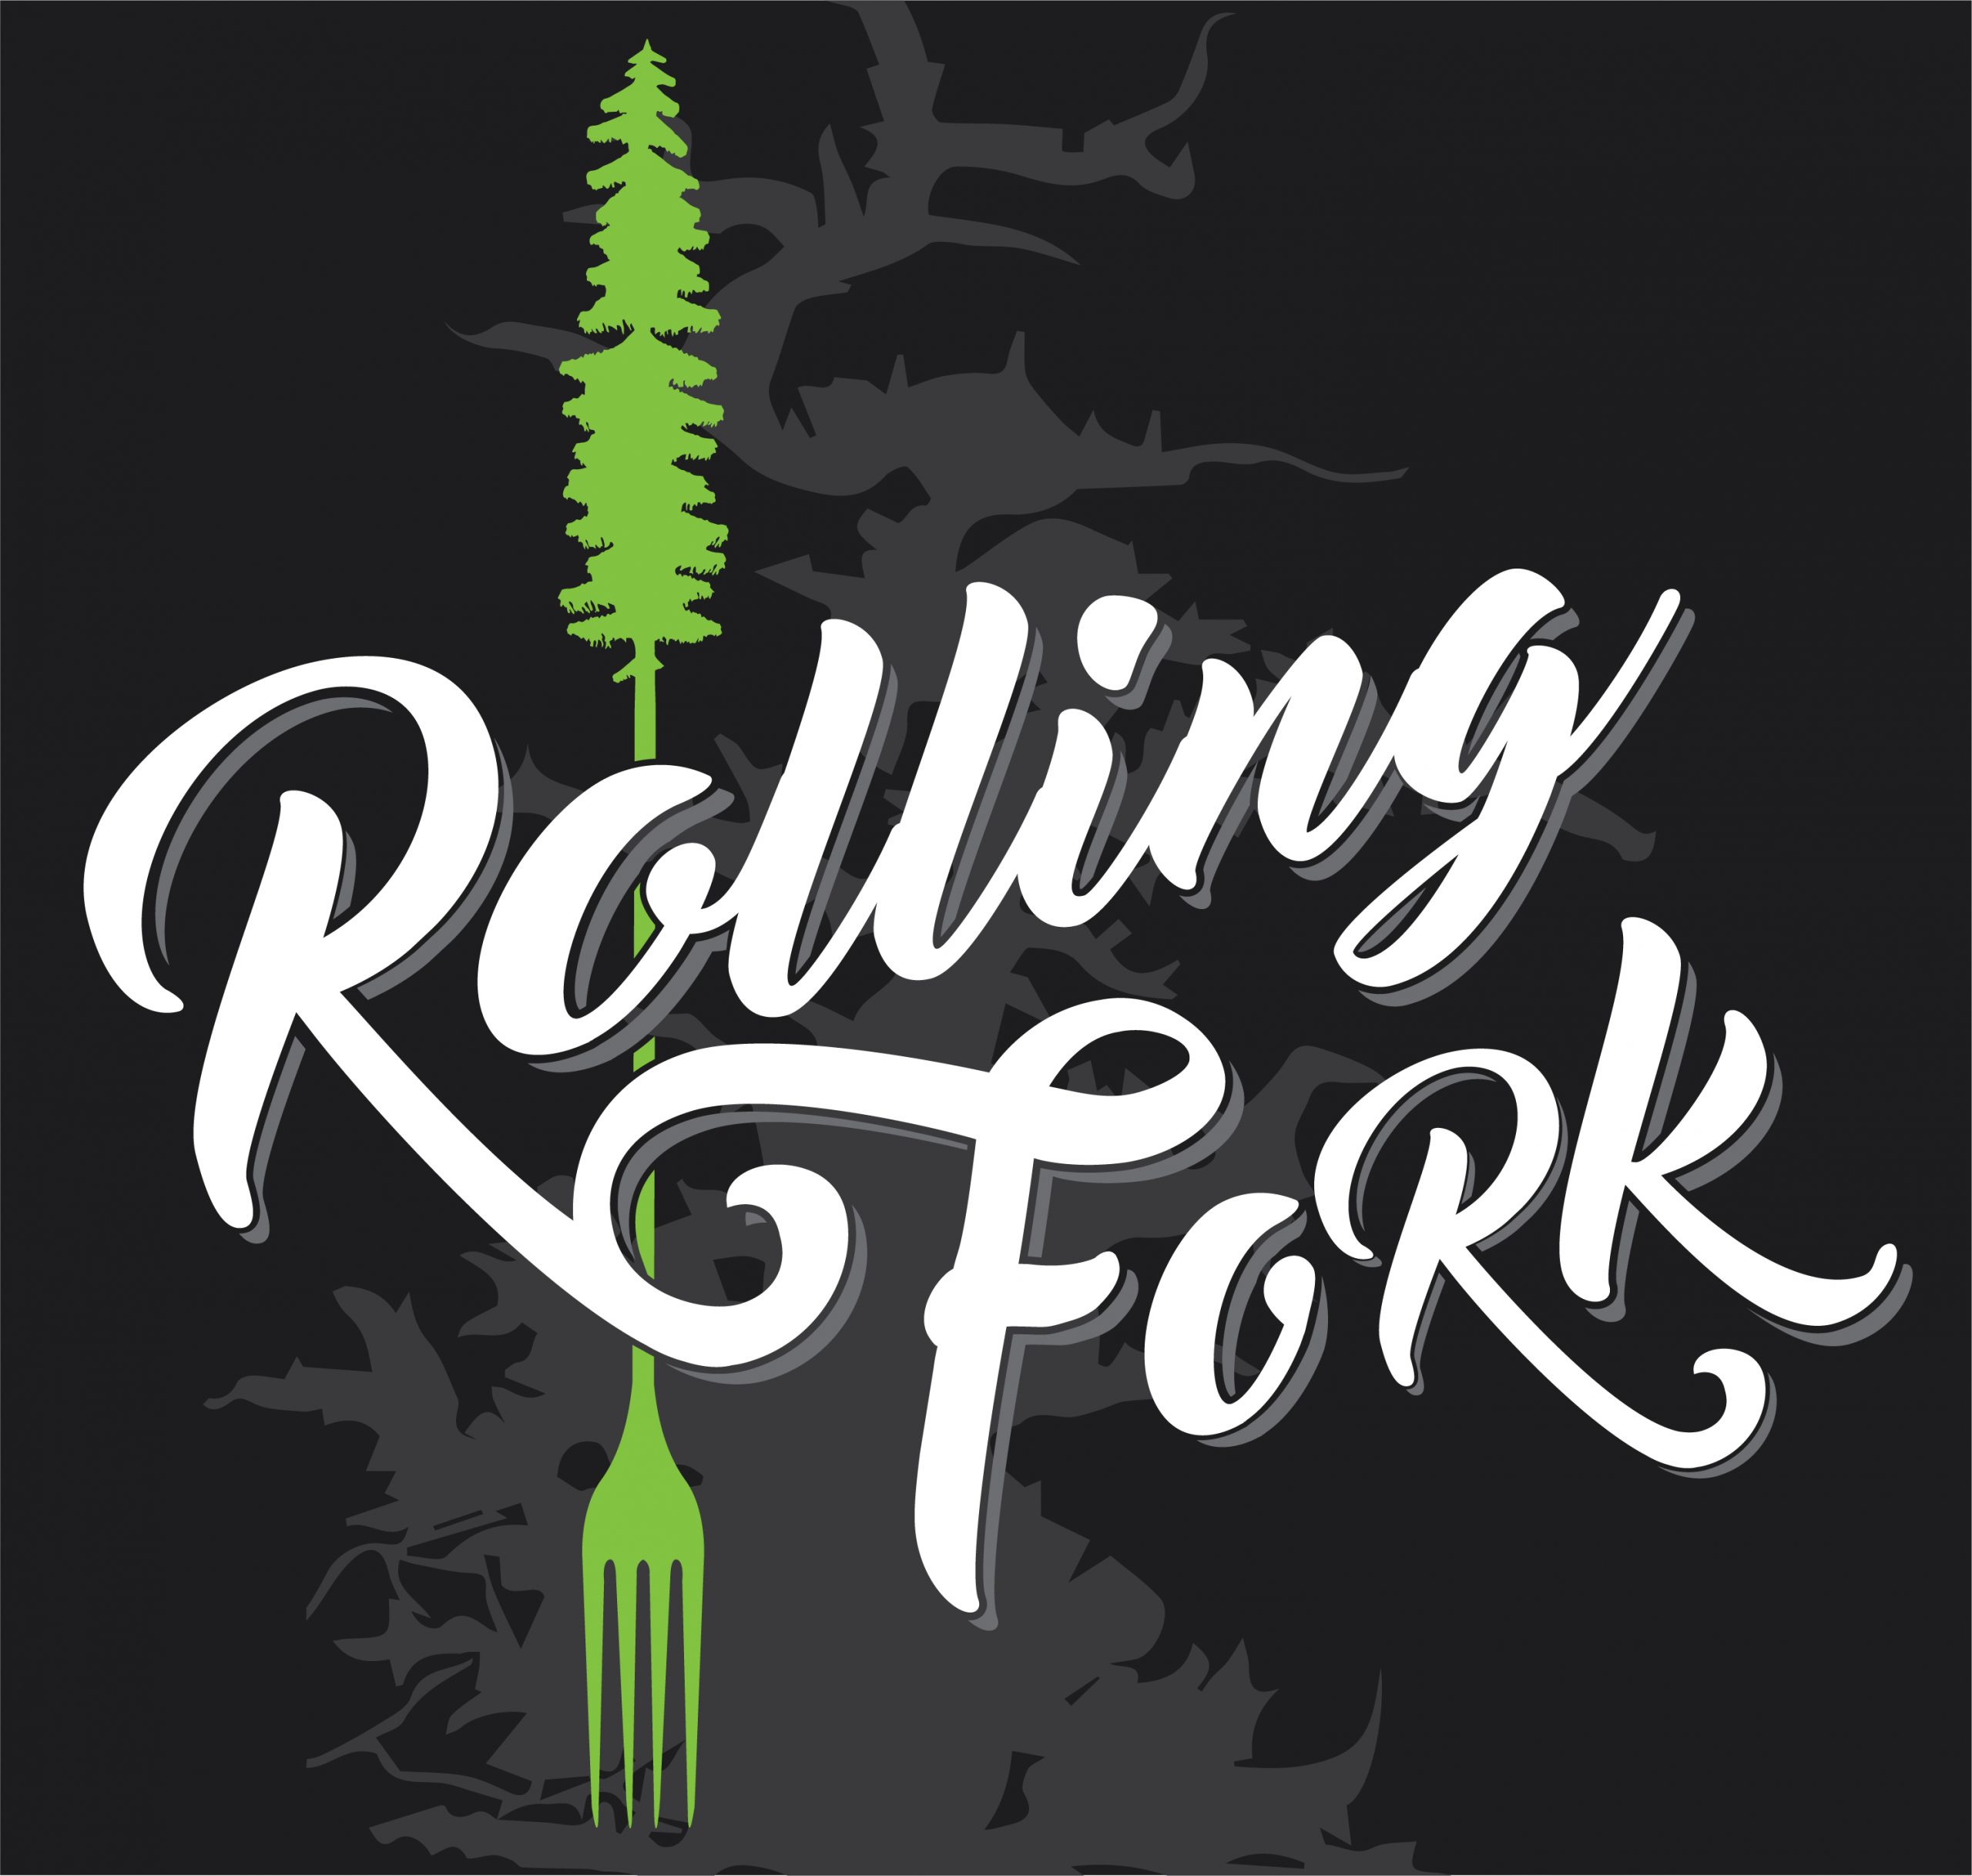 ROLLING-FORK-RIVER Takery Catering Restaurant Broken Bow OK